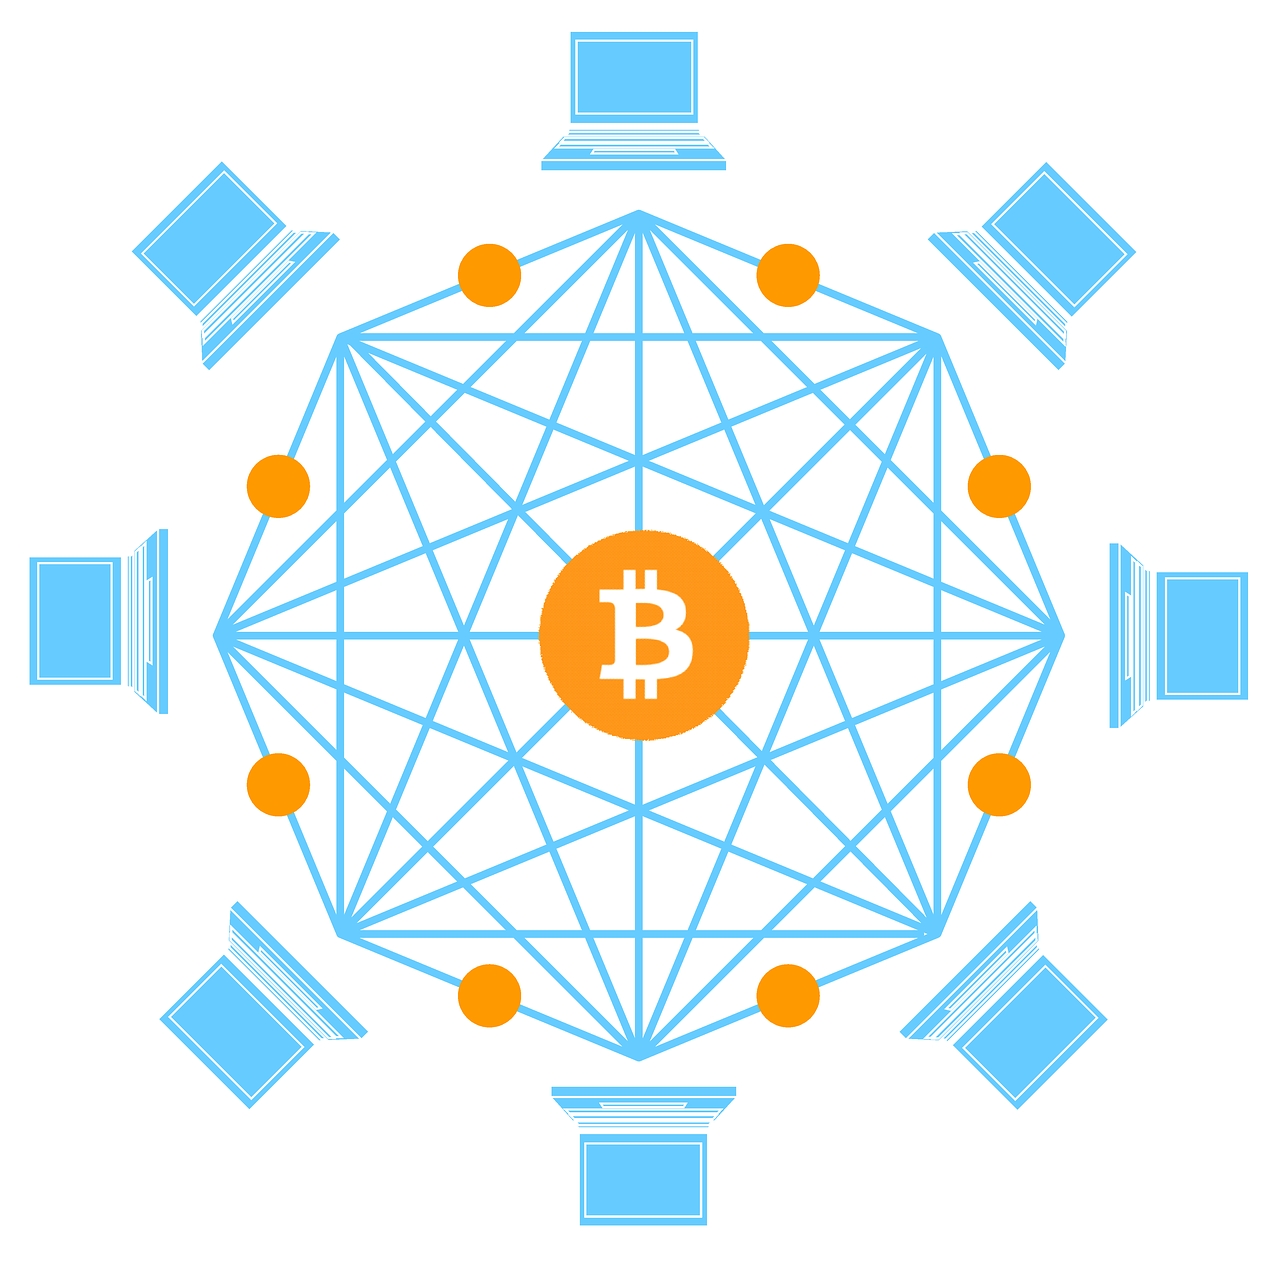 Bitcoin blockchain network